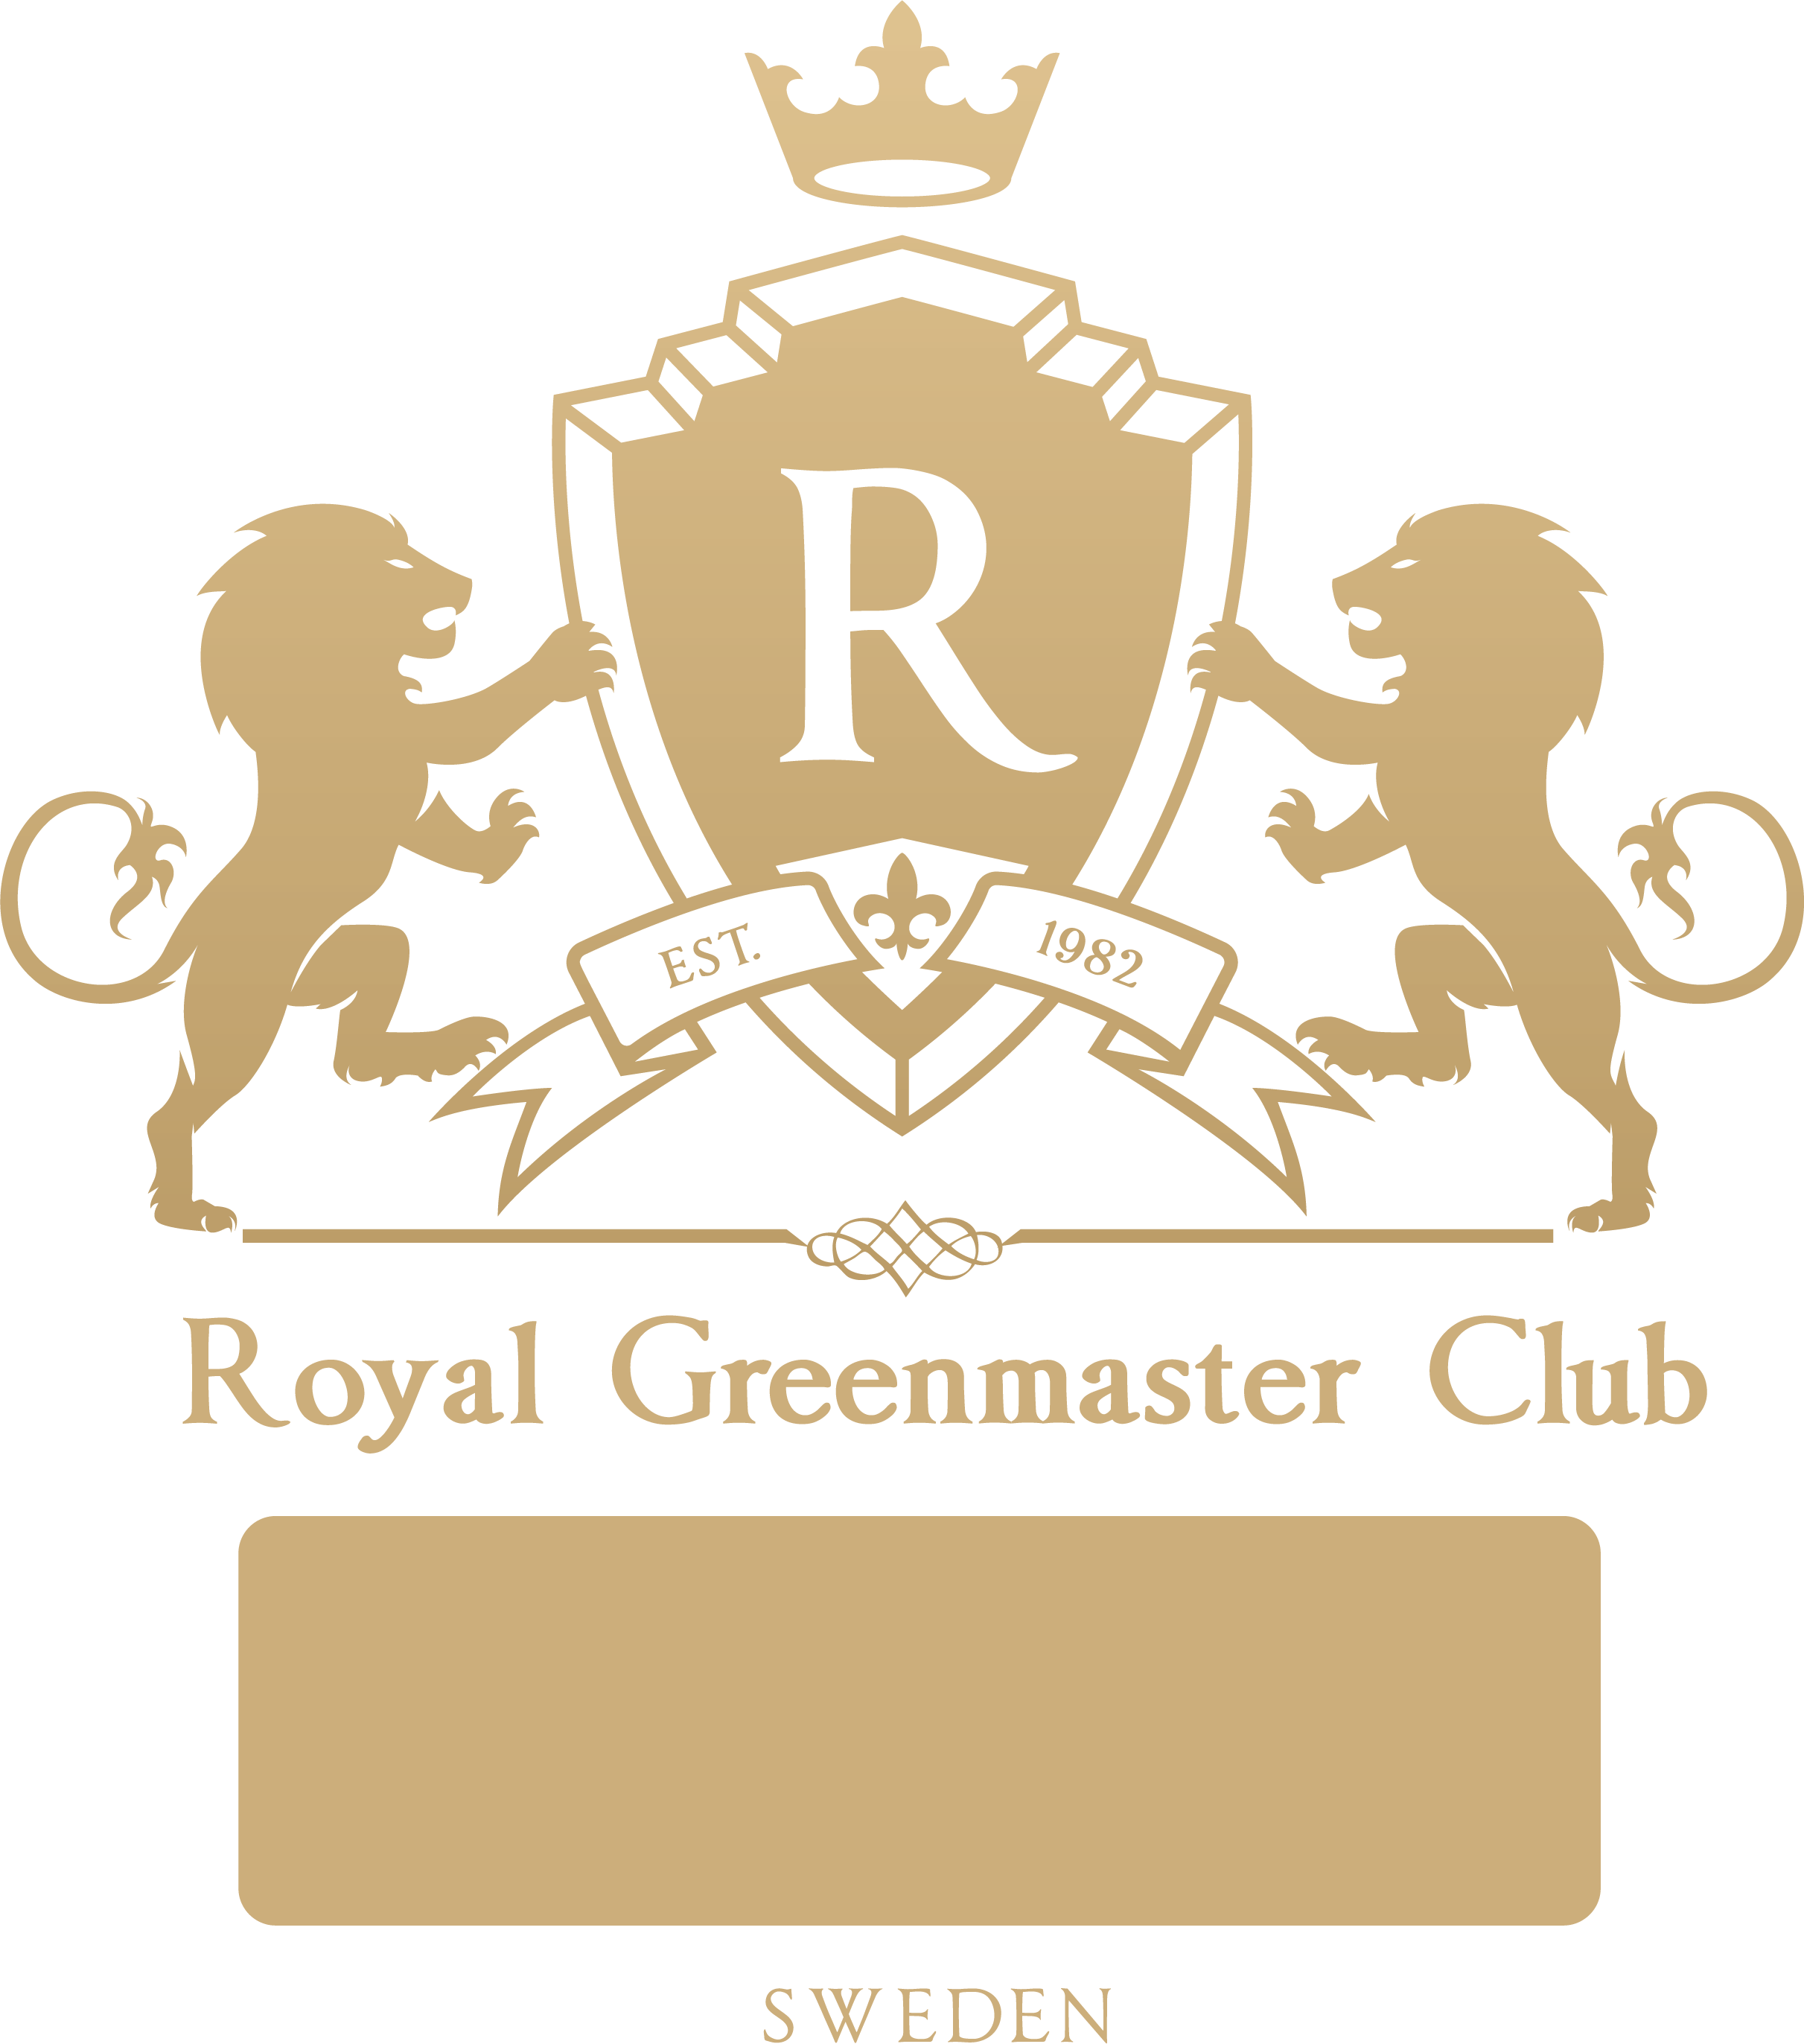 The Greenmaster Club